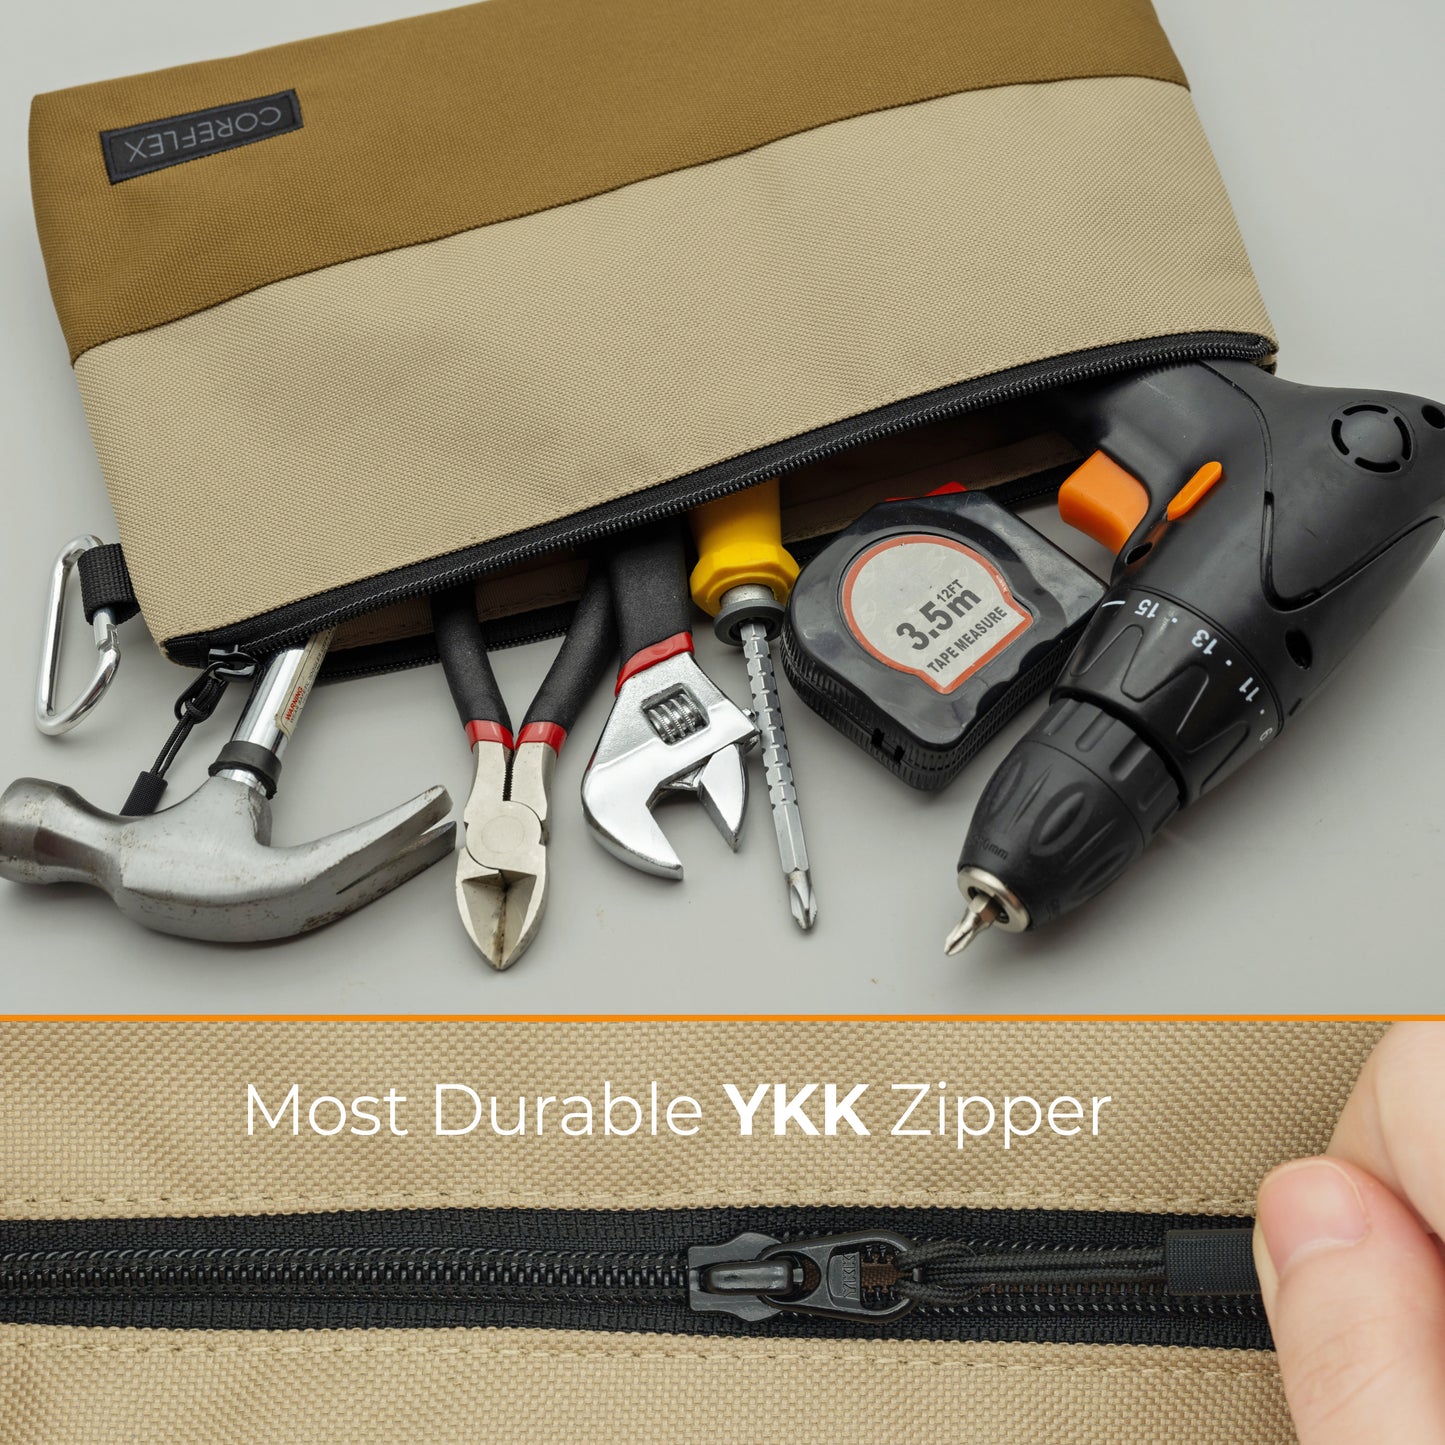 Coreflex 3pack premium Tool Pouch Zipper Bag, Multipurpose Storage pouch. Enhanced Bottom